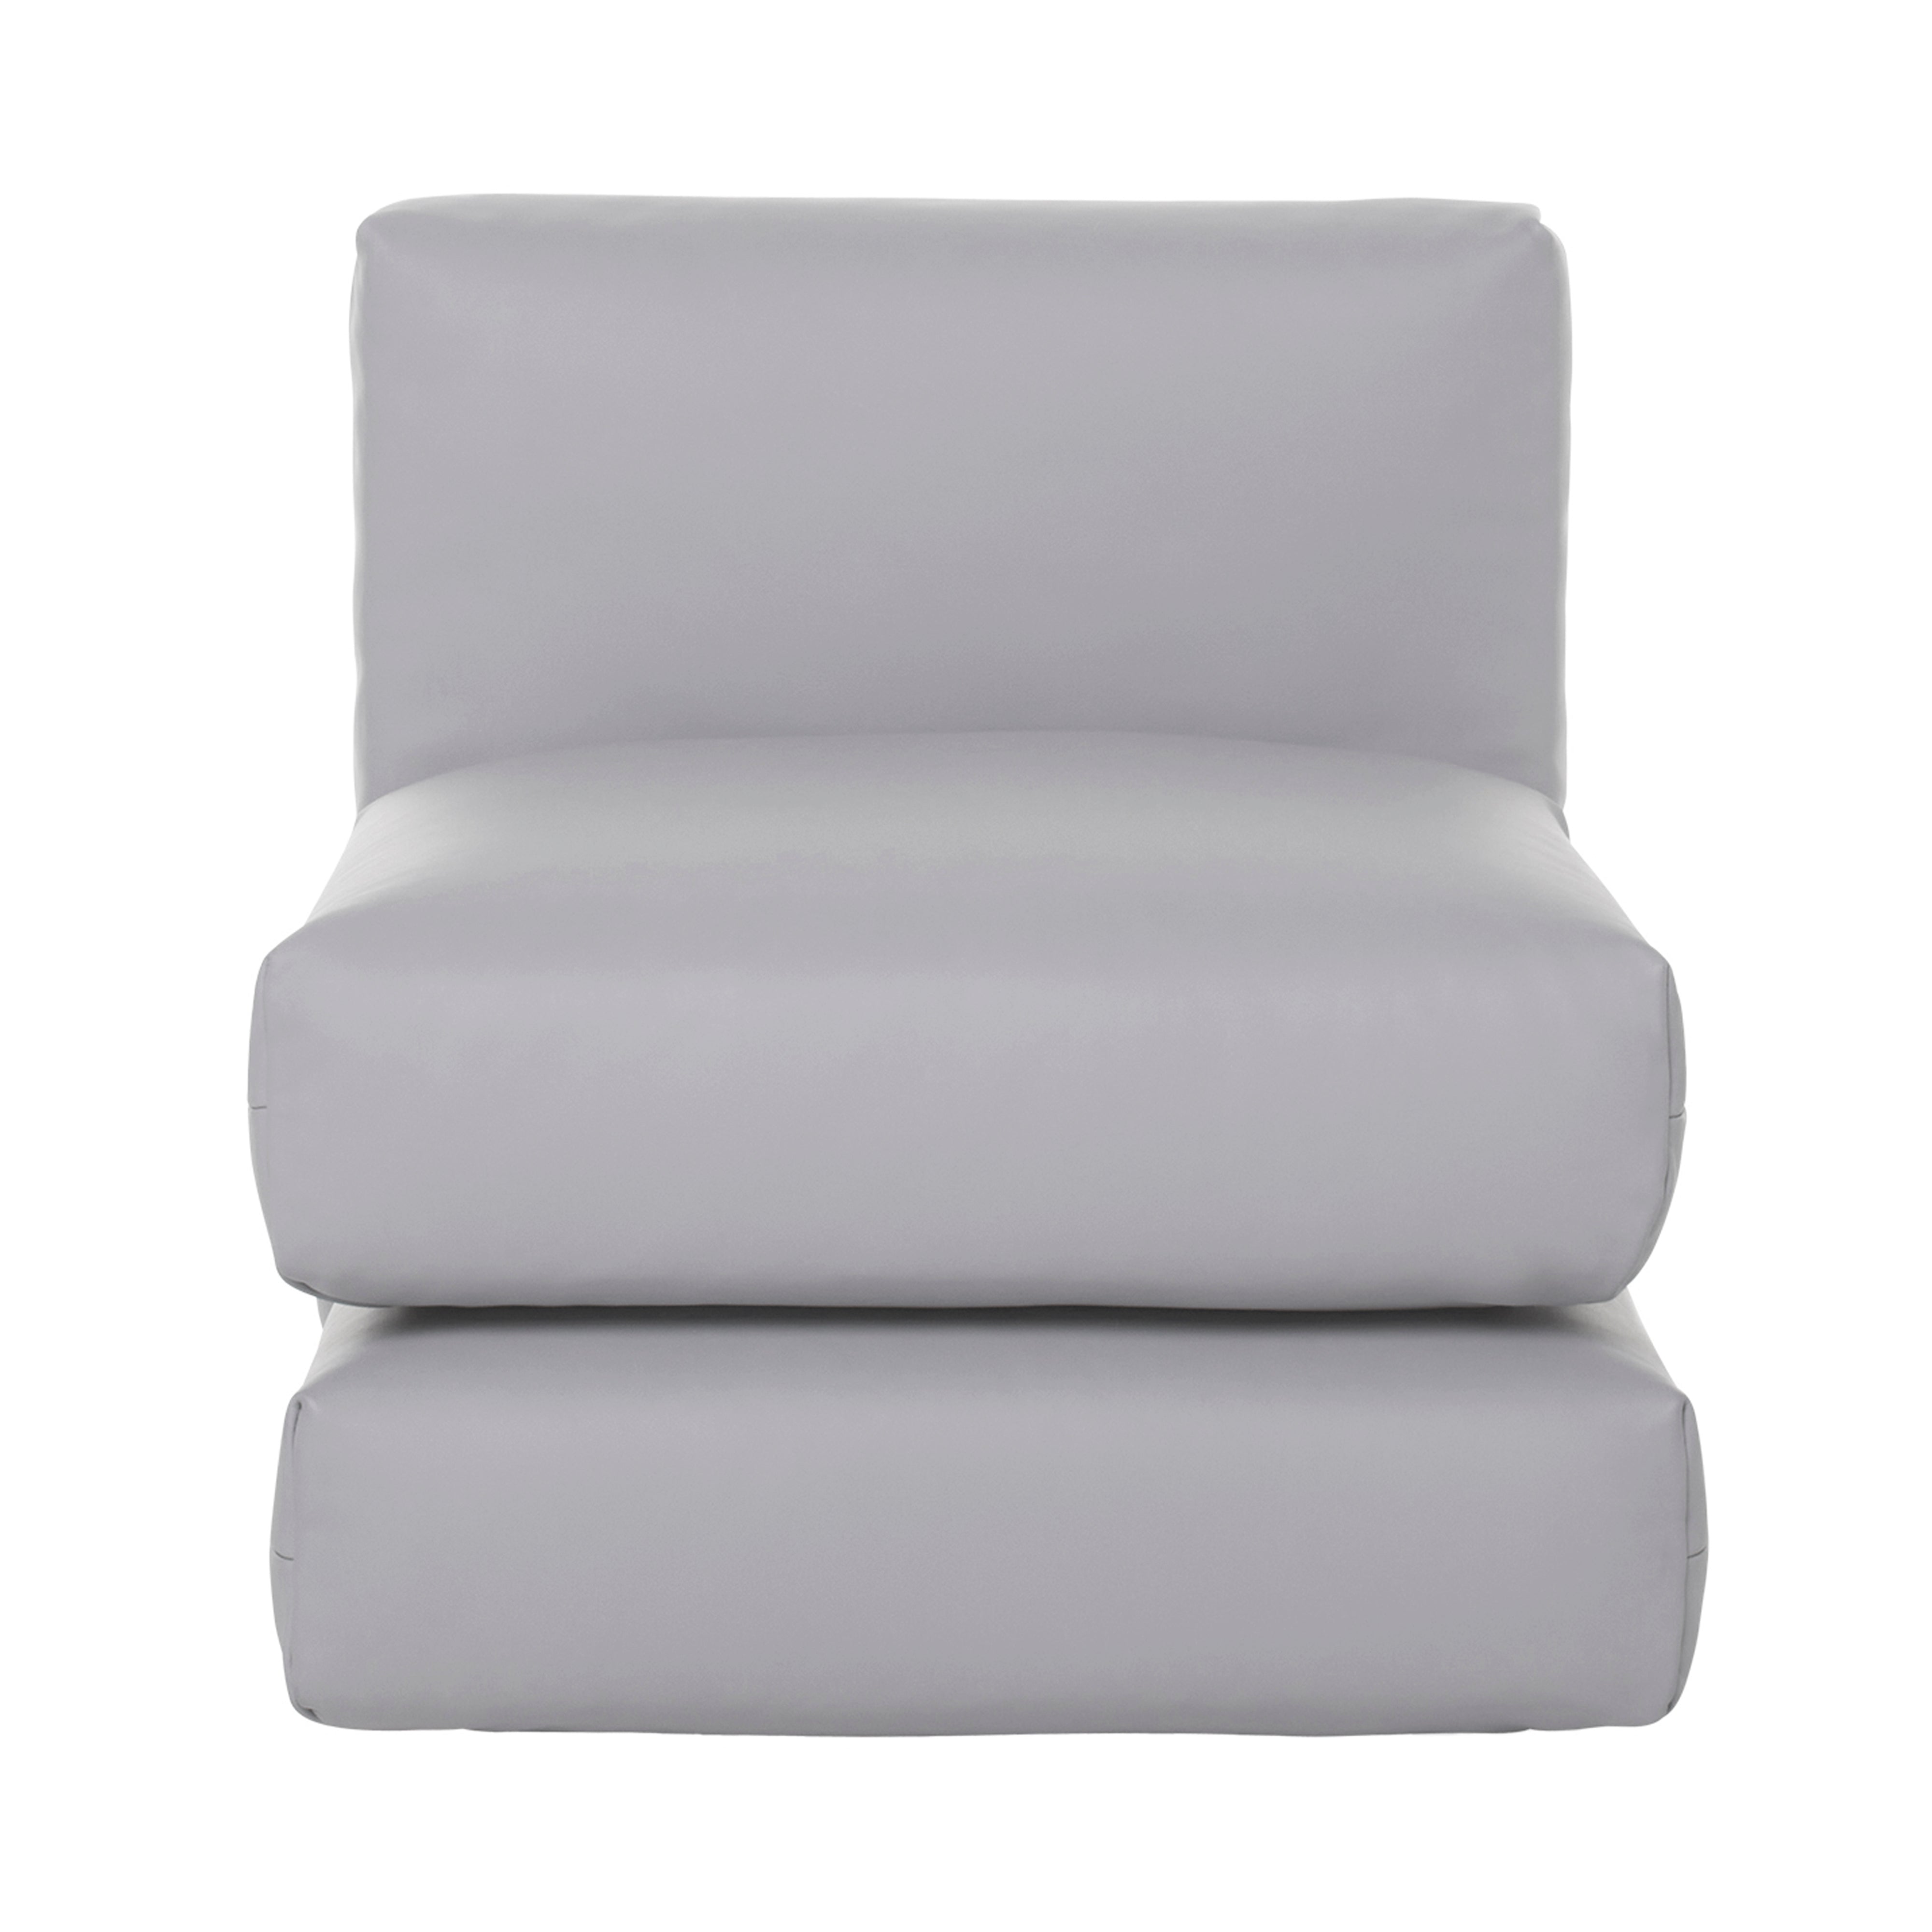 Pillow Sofa: Modules + Center + Florida Leather